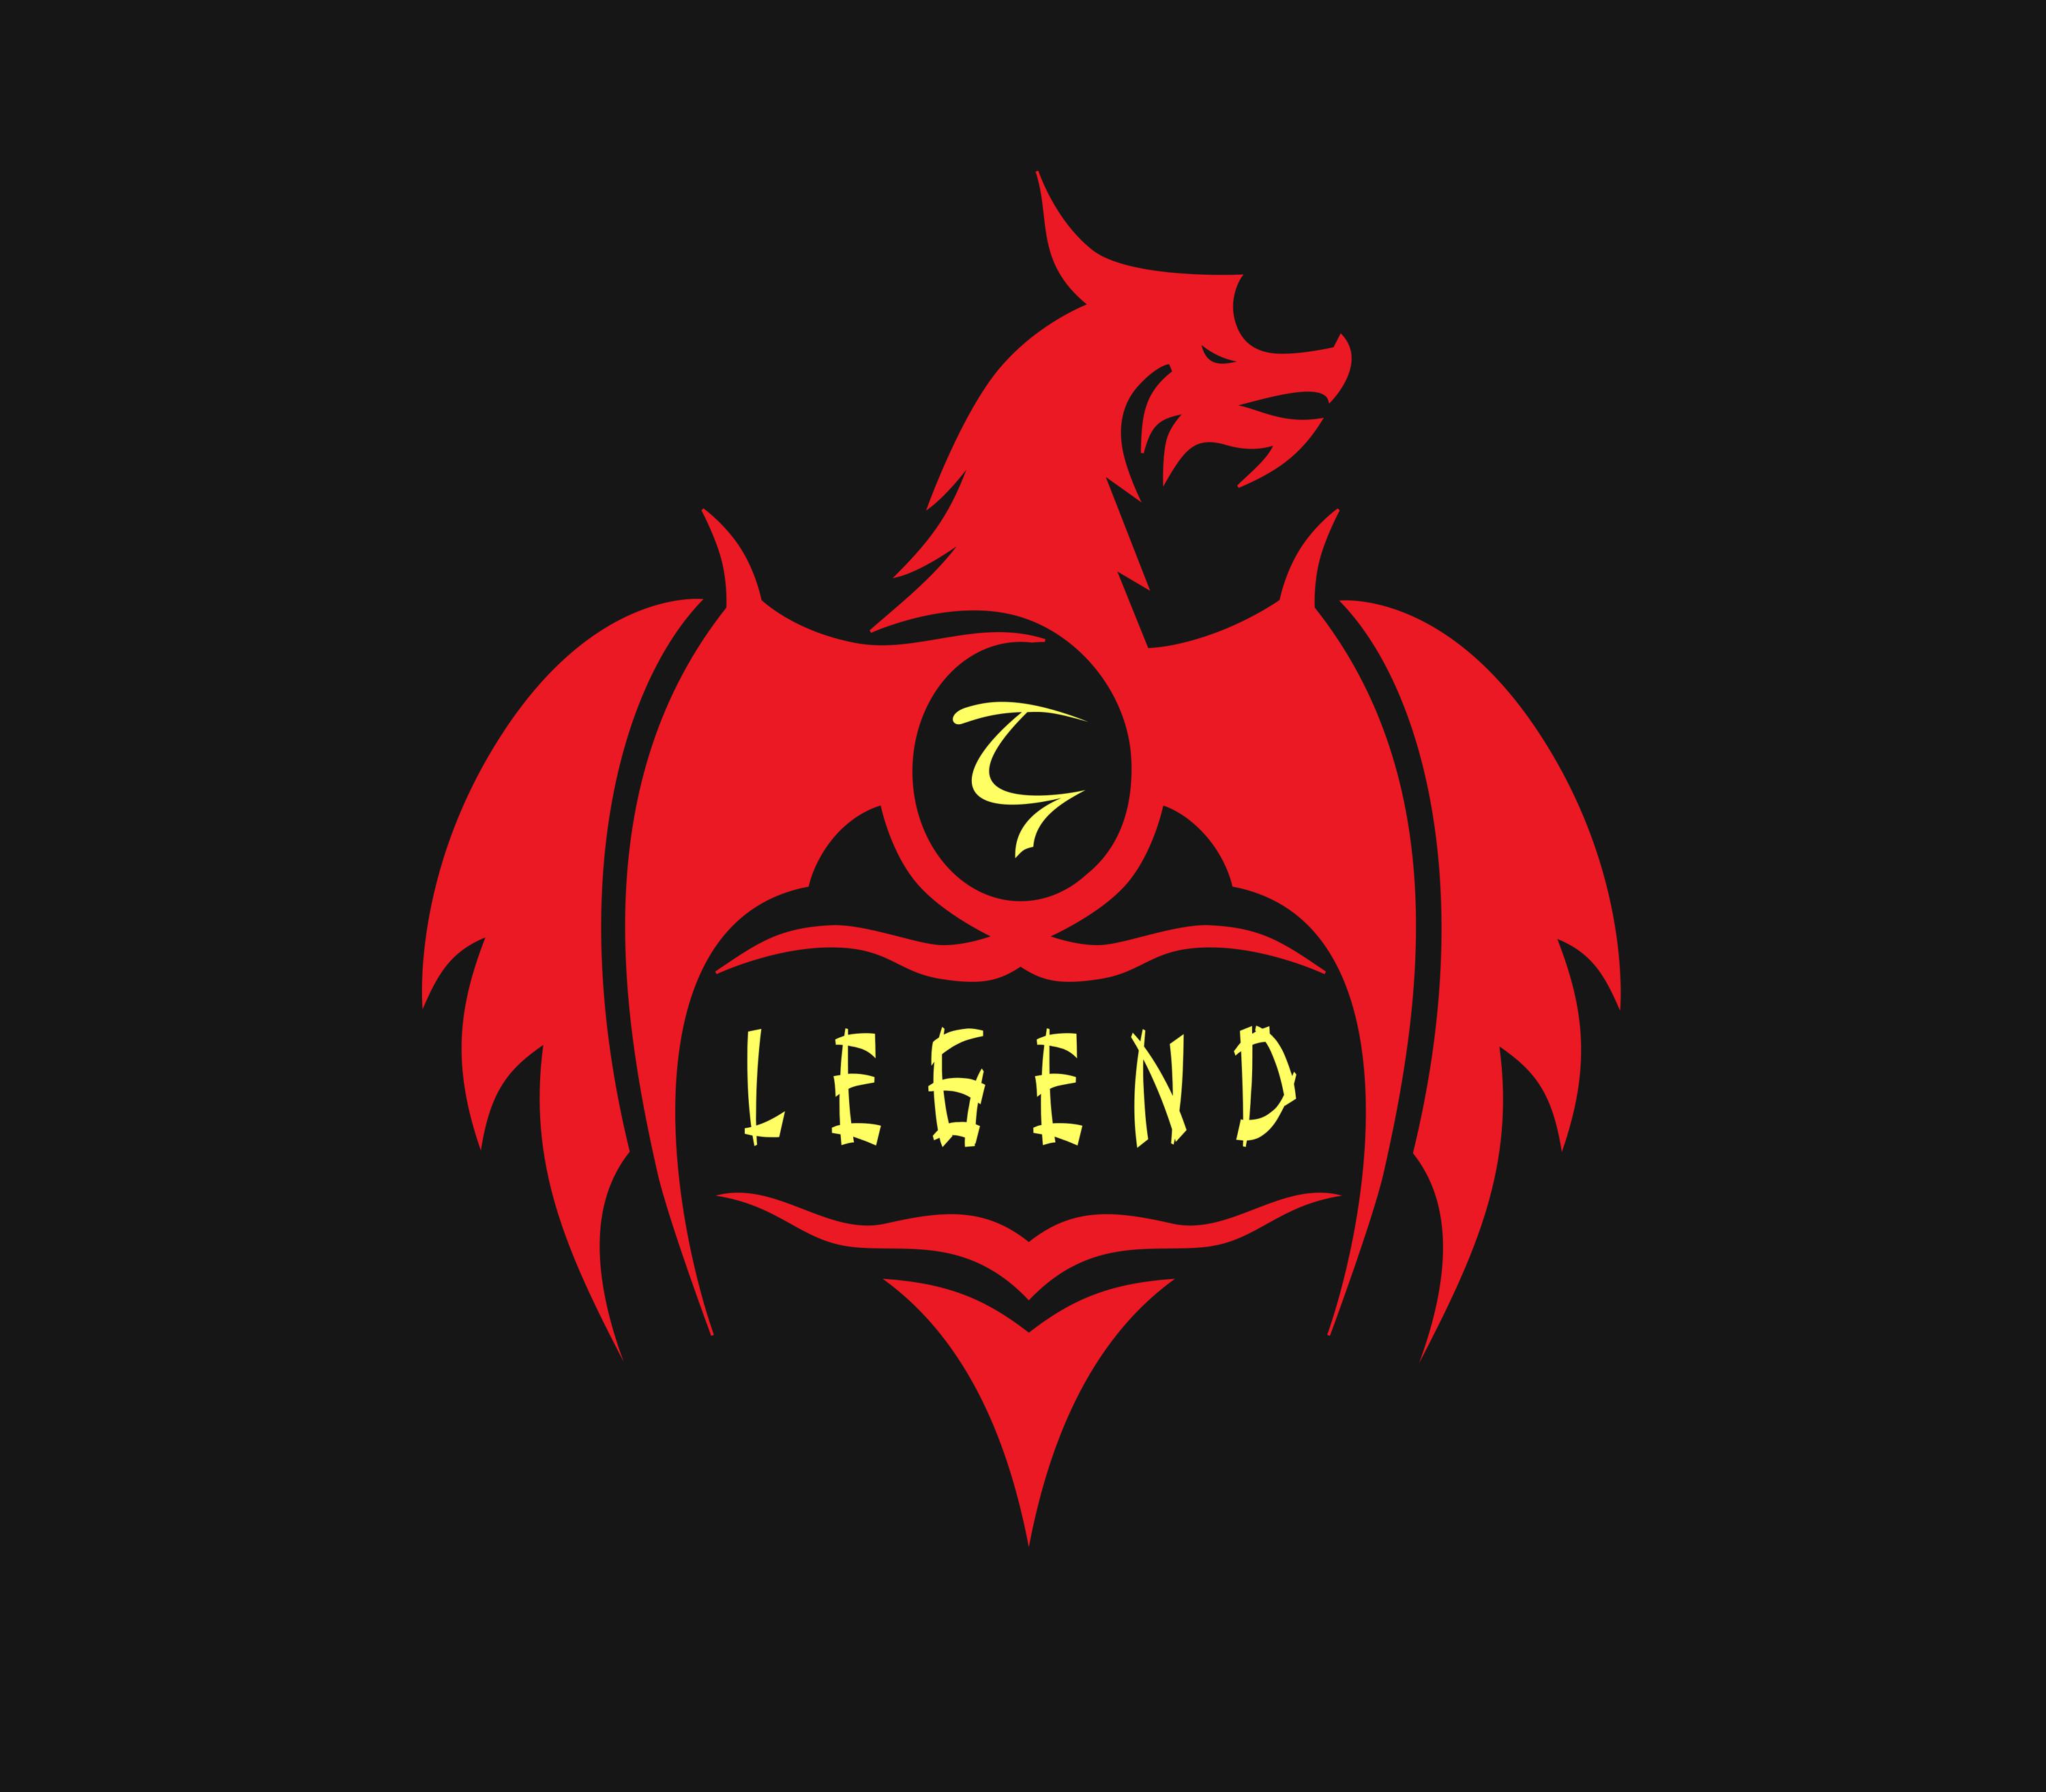 Design of logo - dalegend [youtube]